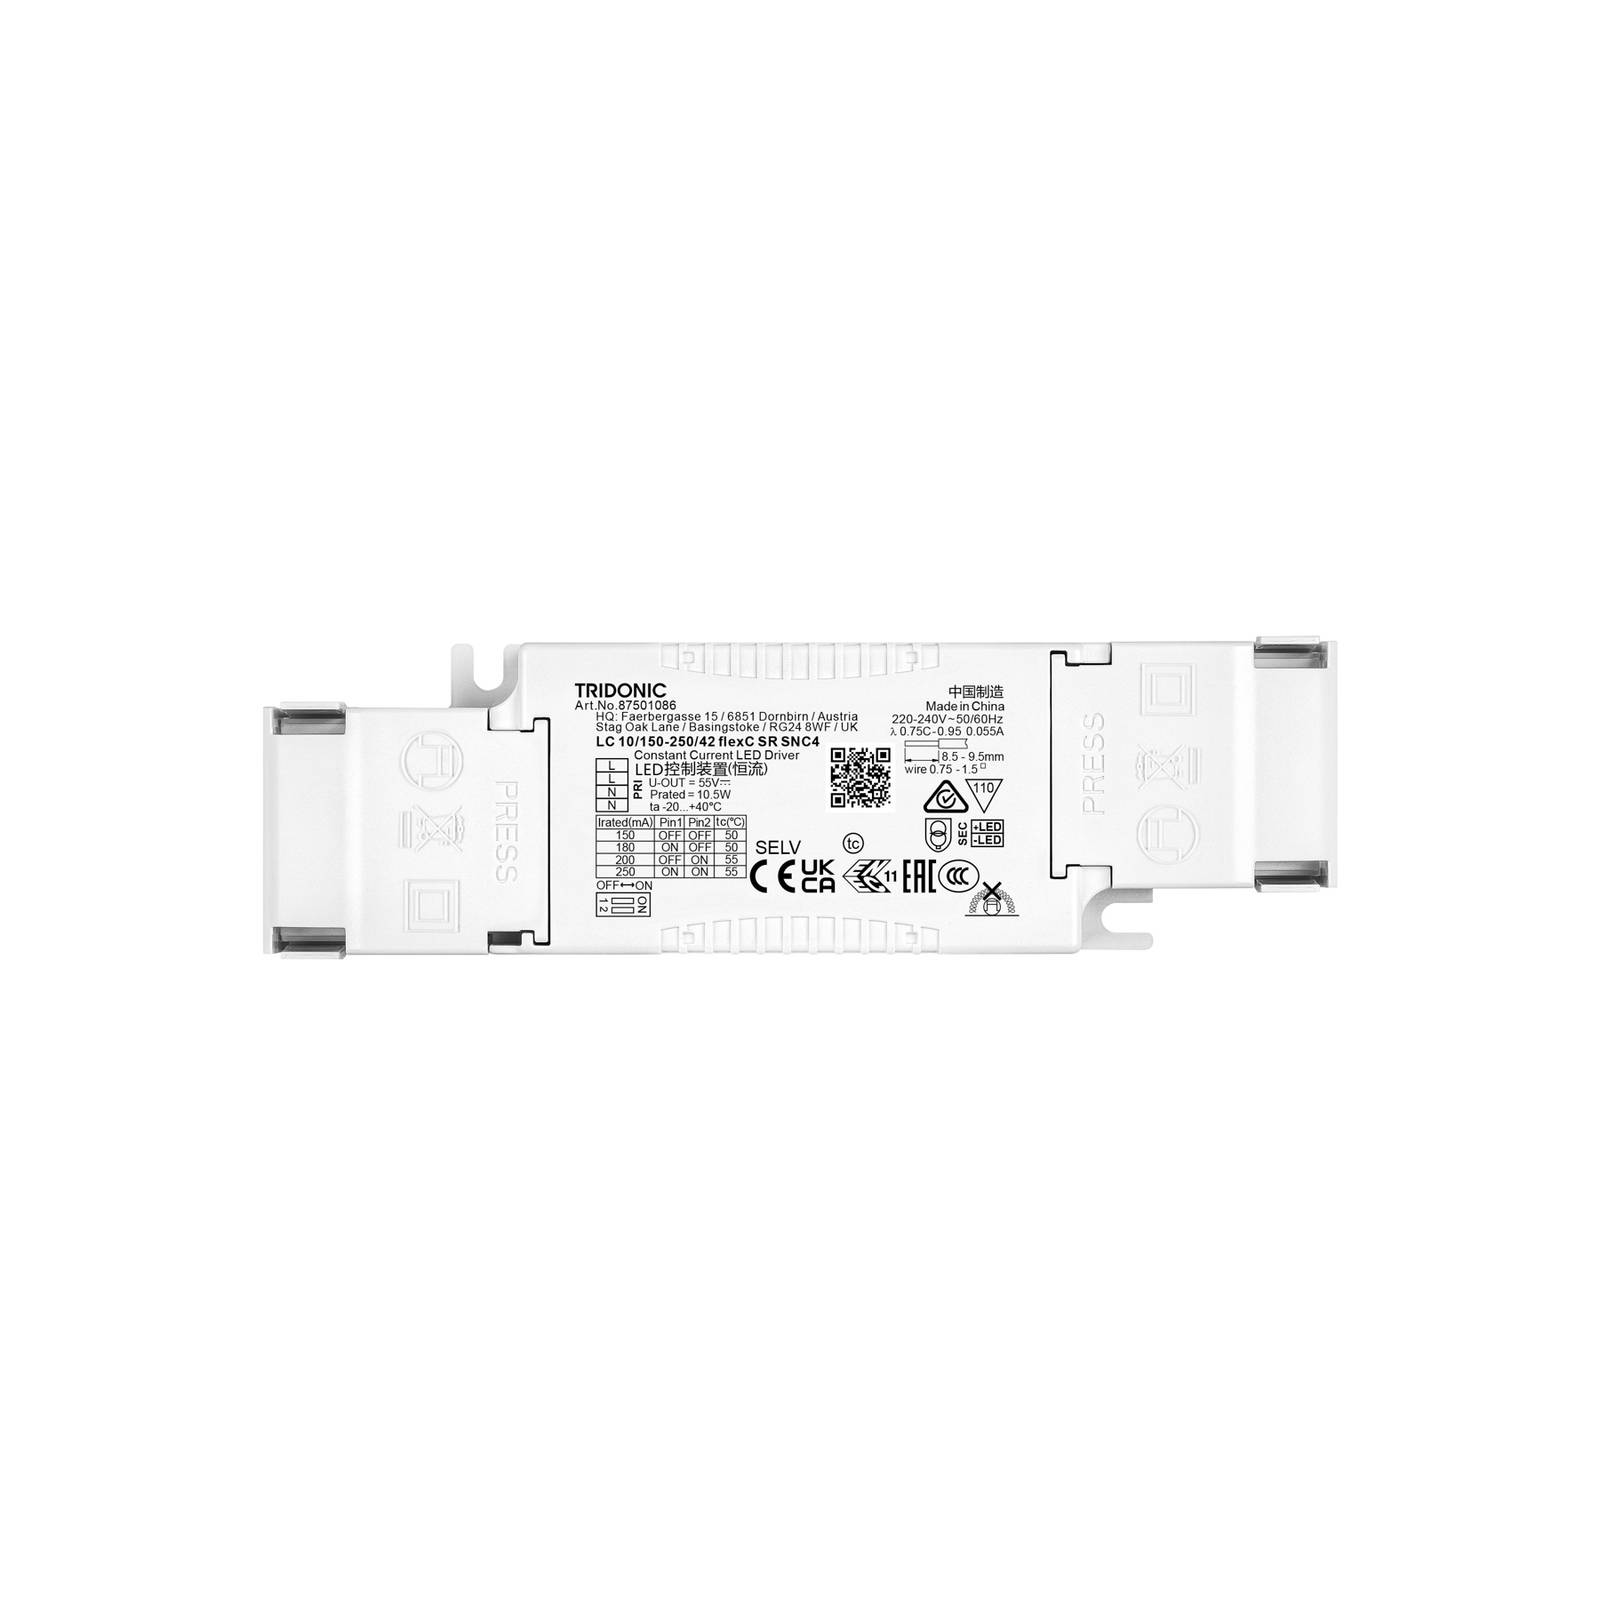 TRIDONIC LED kompakt meghajtó LC 10/150-250/42 flexC SR SNC4